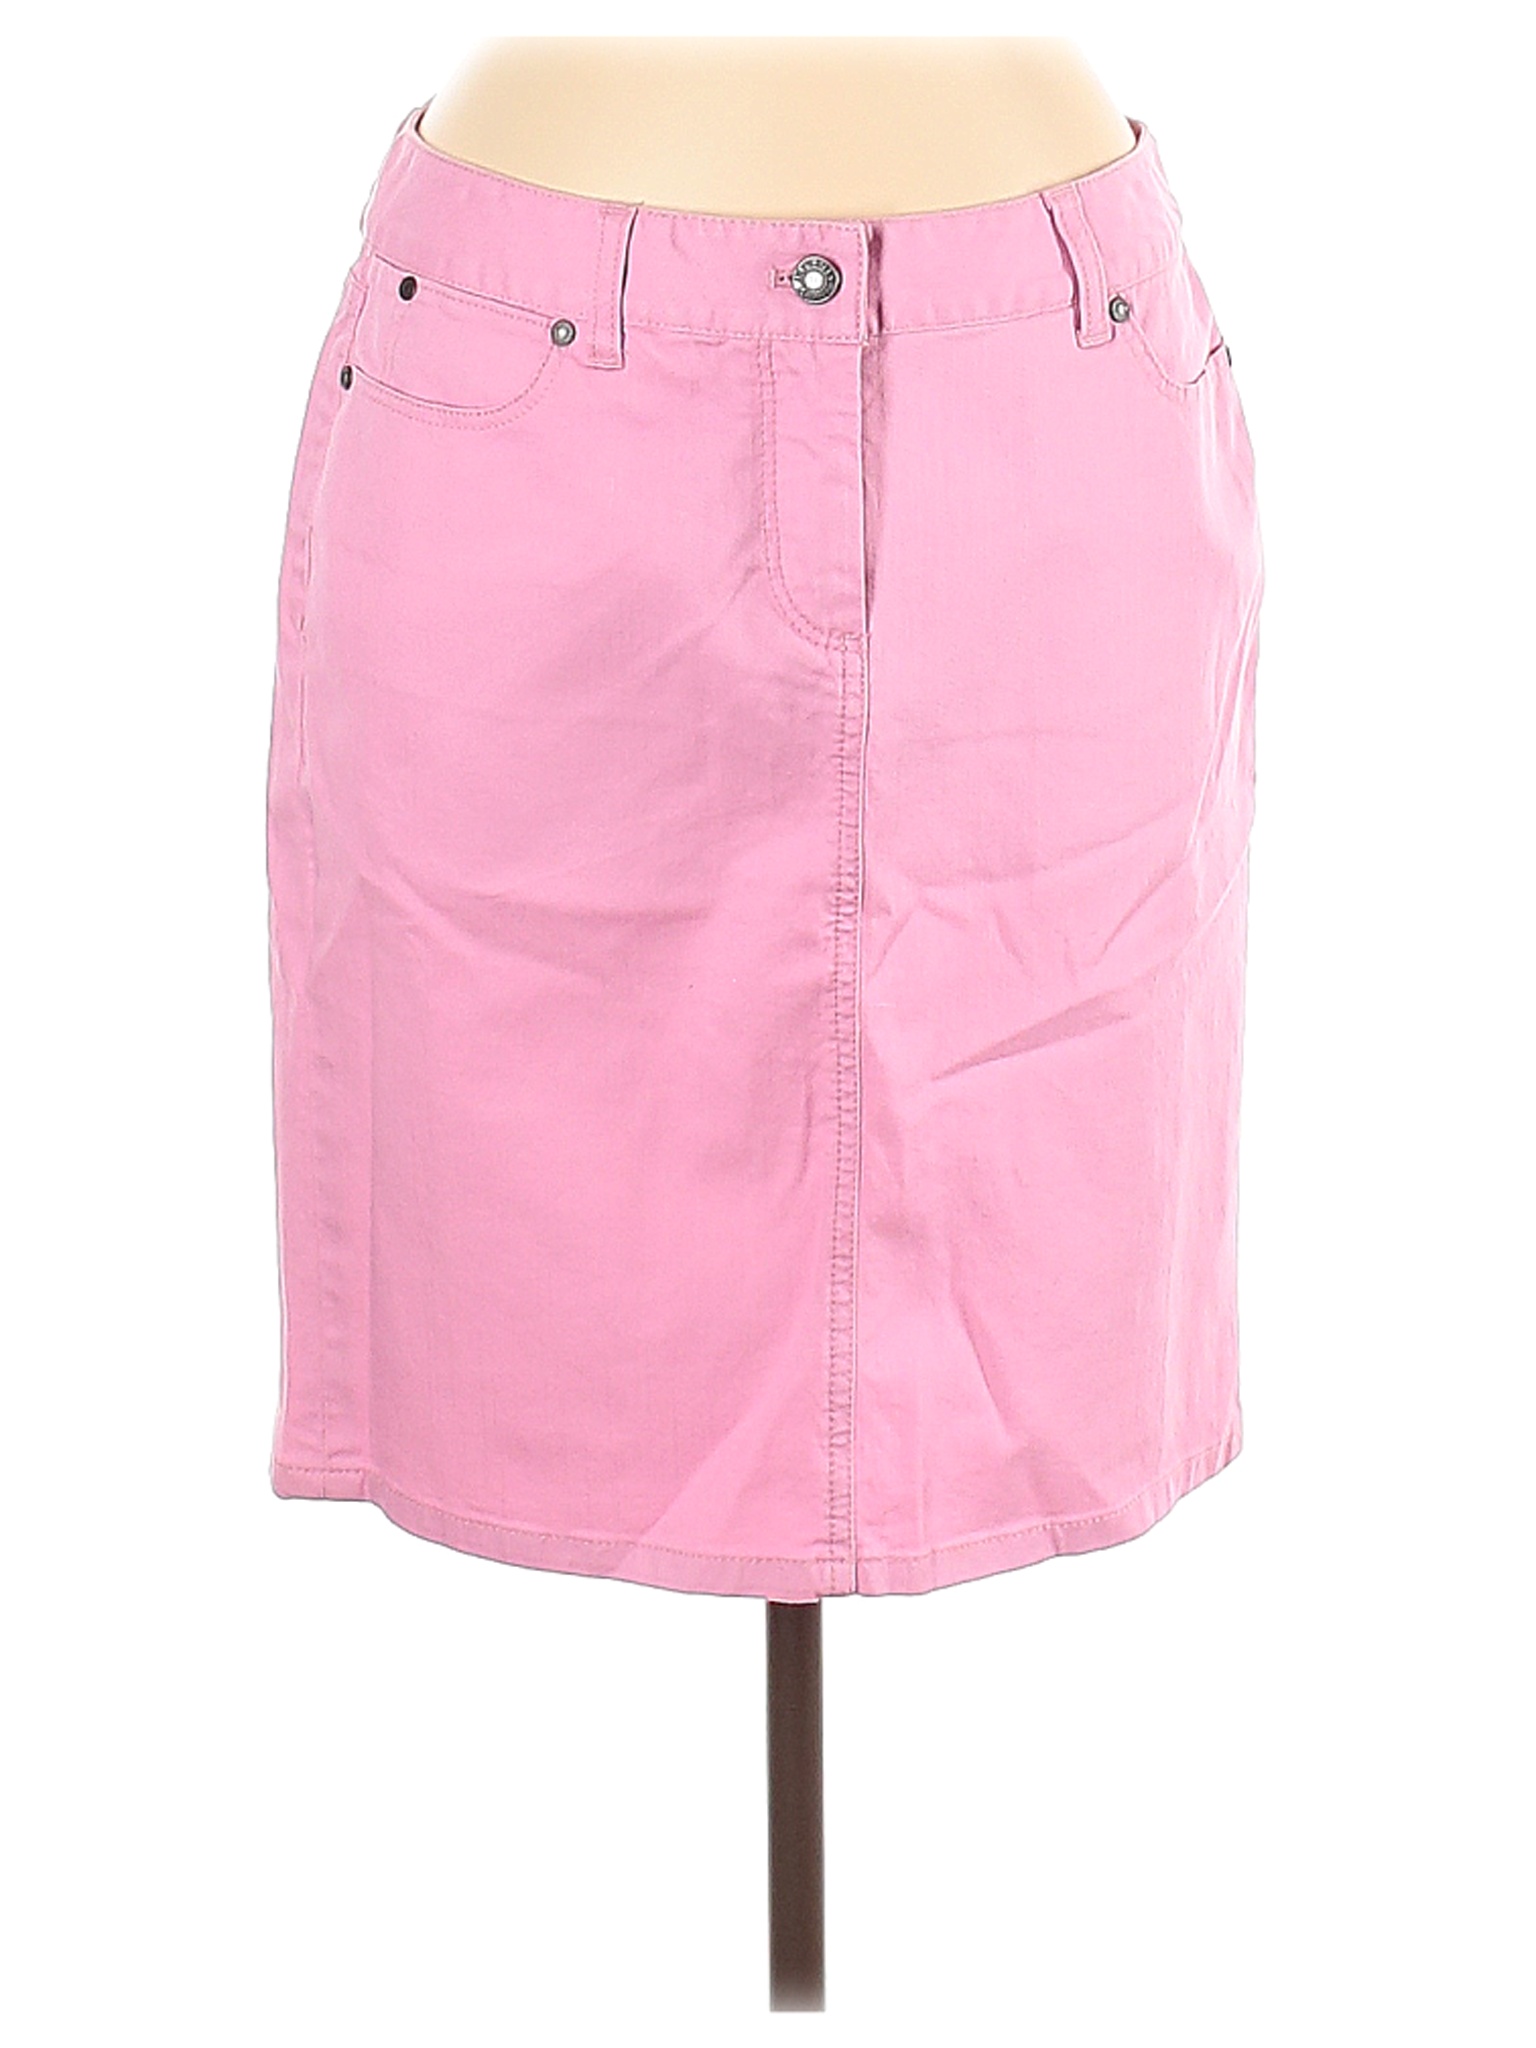 NWT Talbots Women Pink Denim Skirt 6 | eBay